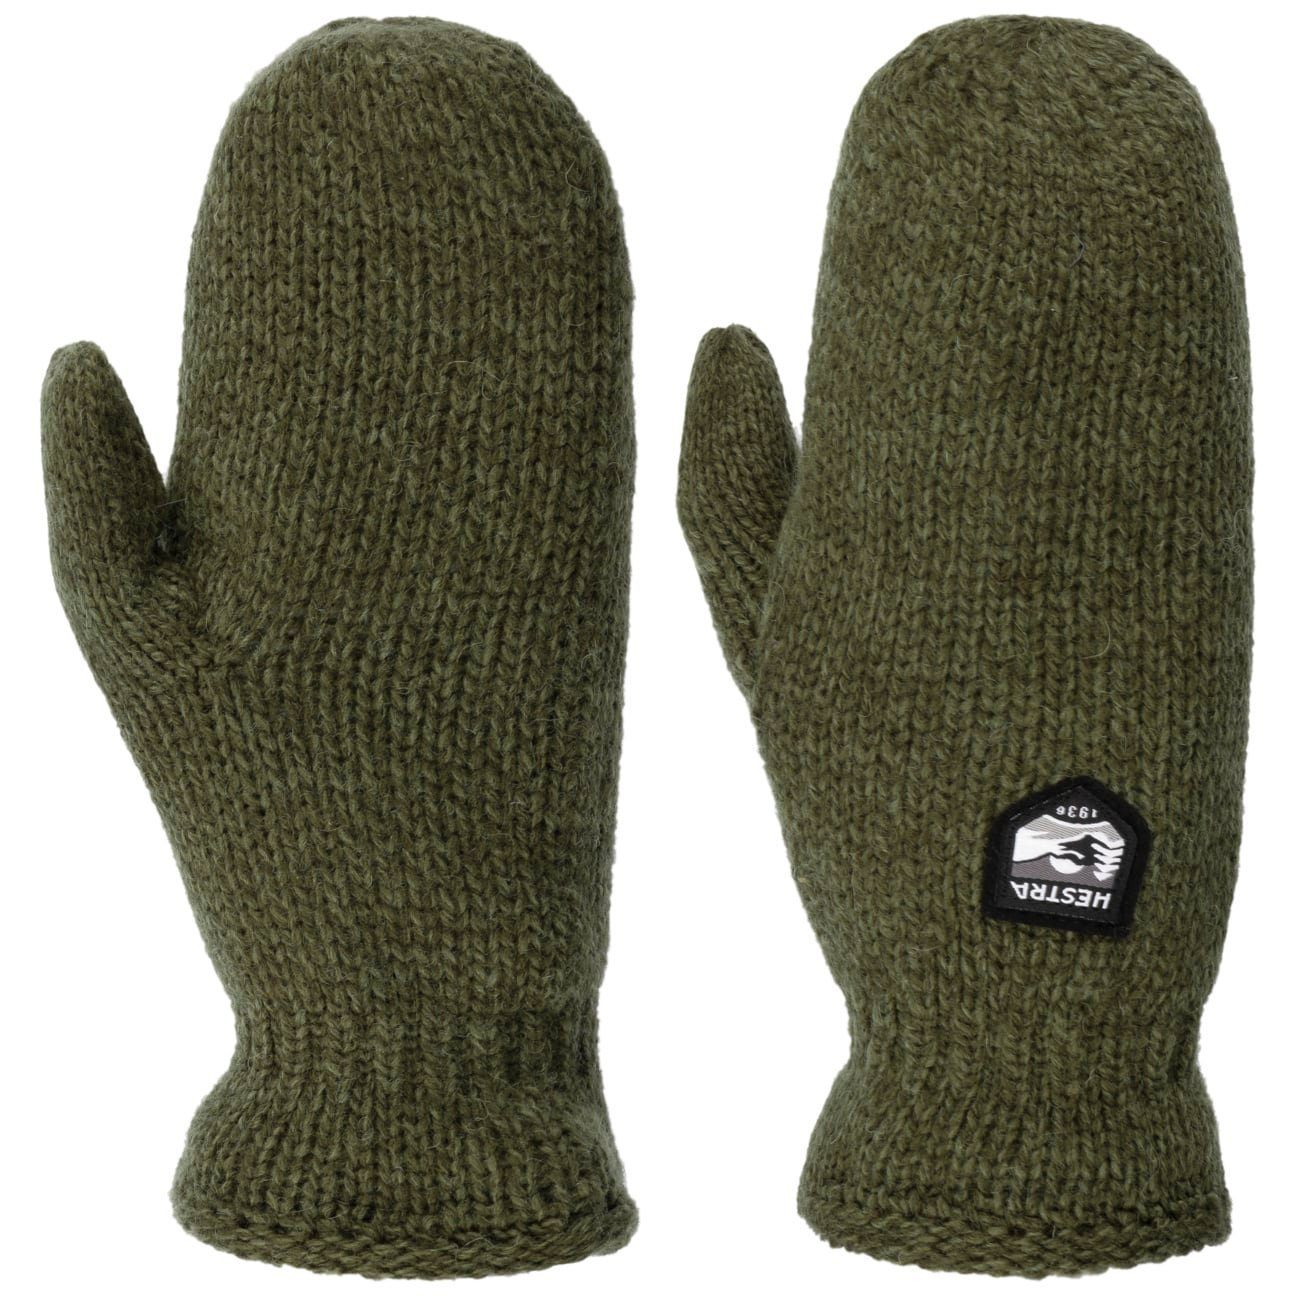 Hestra Strickhandschuhe Handschuhe mit Futter oliv